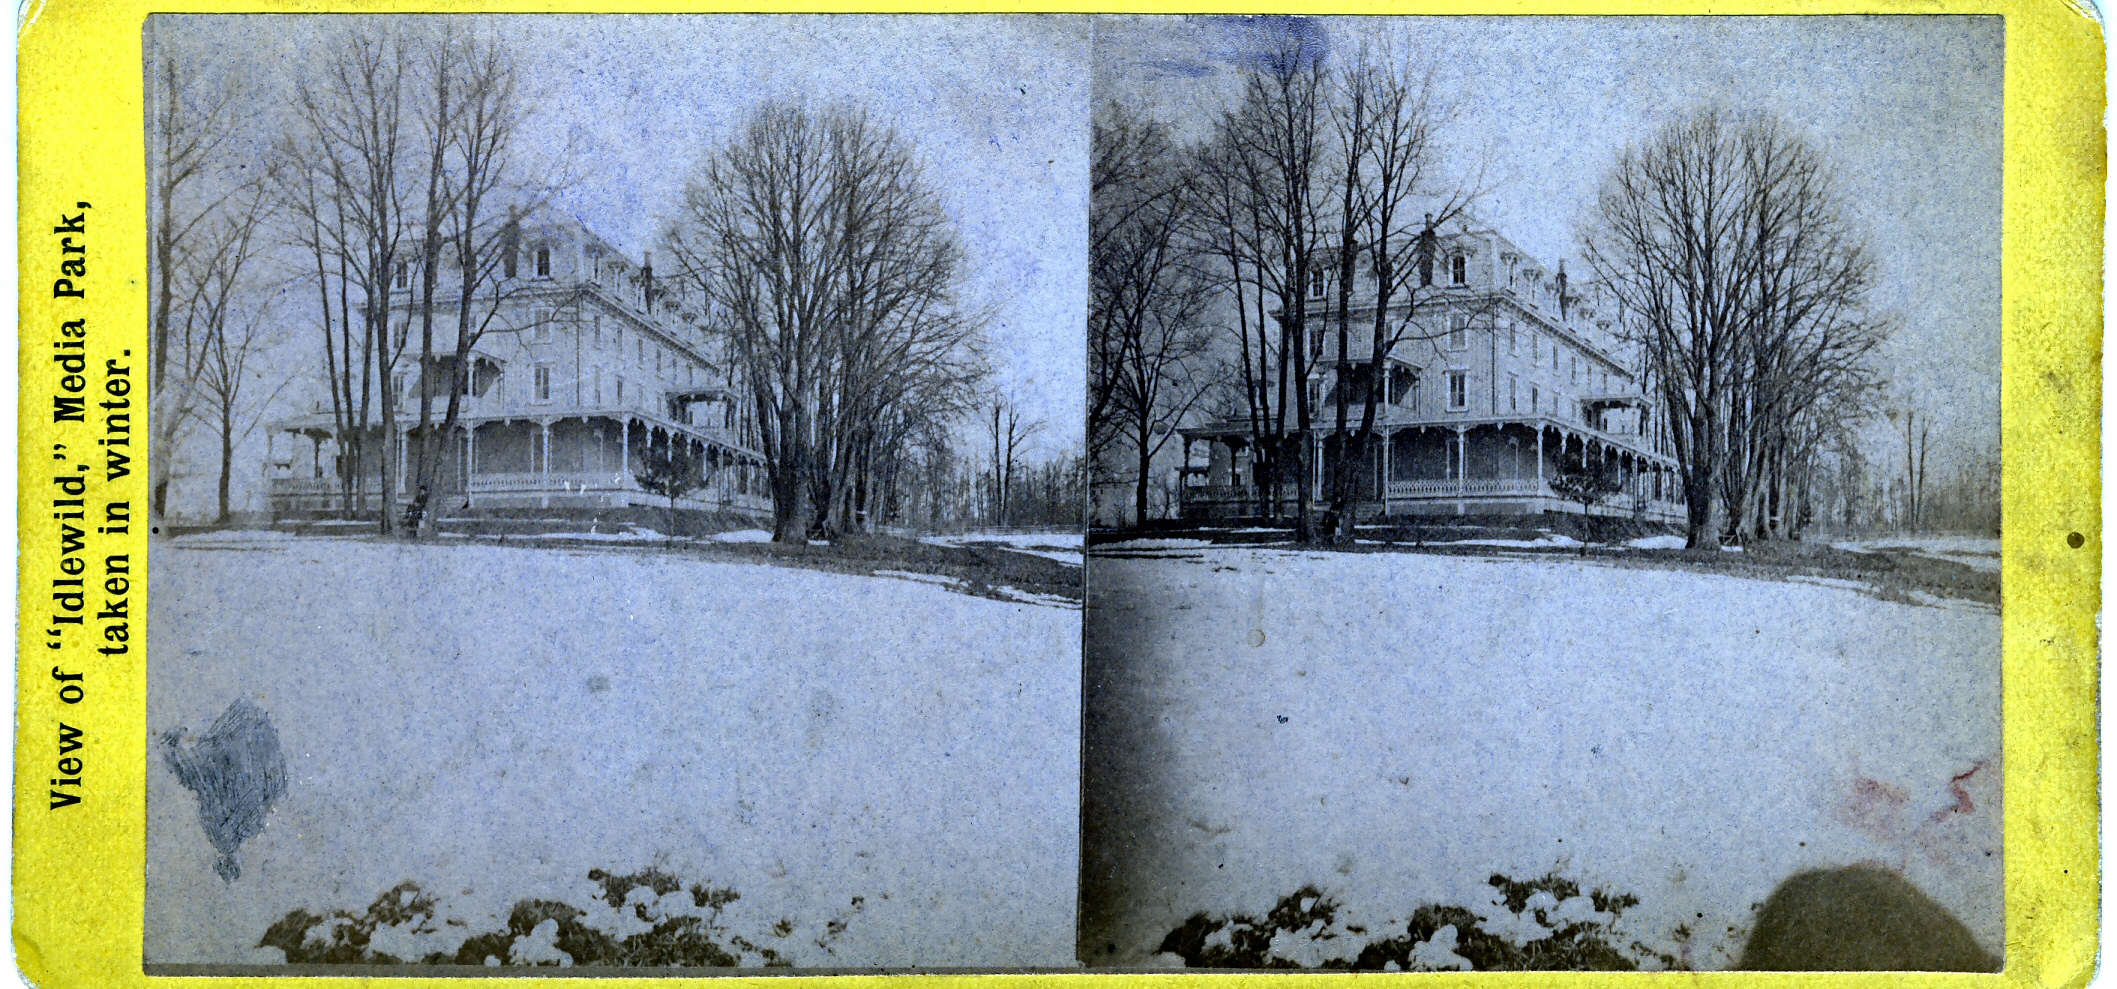 Media Idlewild Inn in Winter c.1890